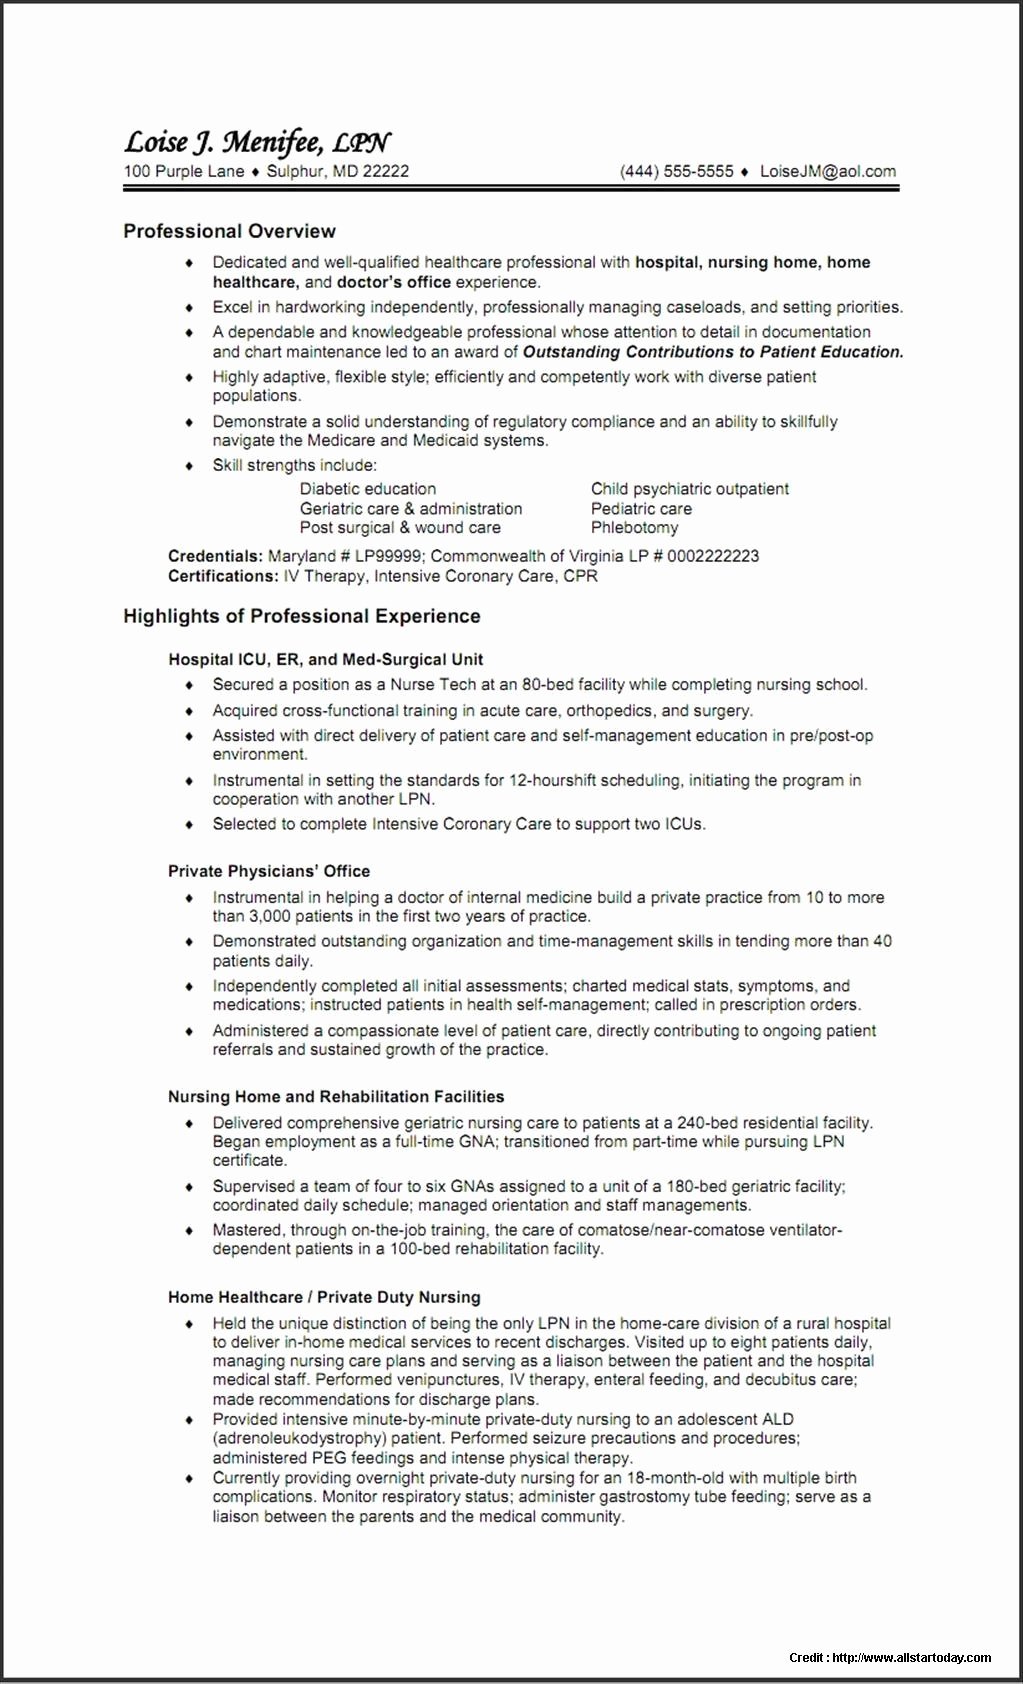 Resume Template for Nursing School Application Resume